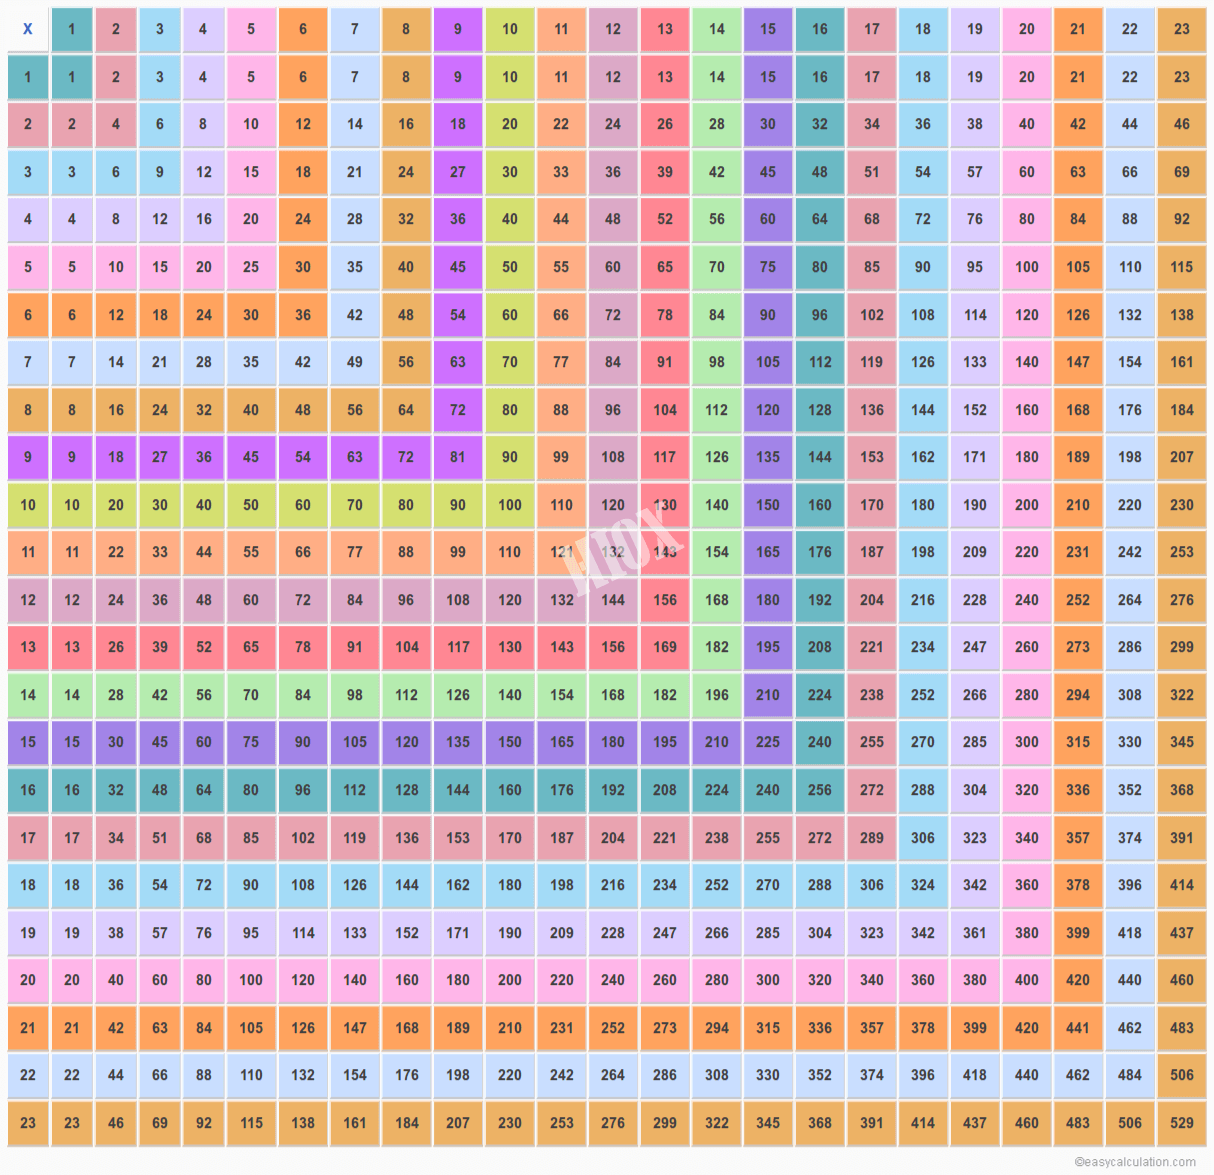 23X23 Multiplication Table | Multiplication Chart Upto 23